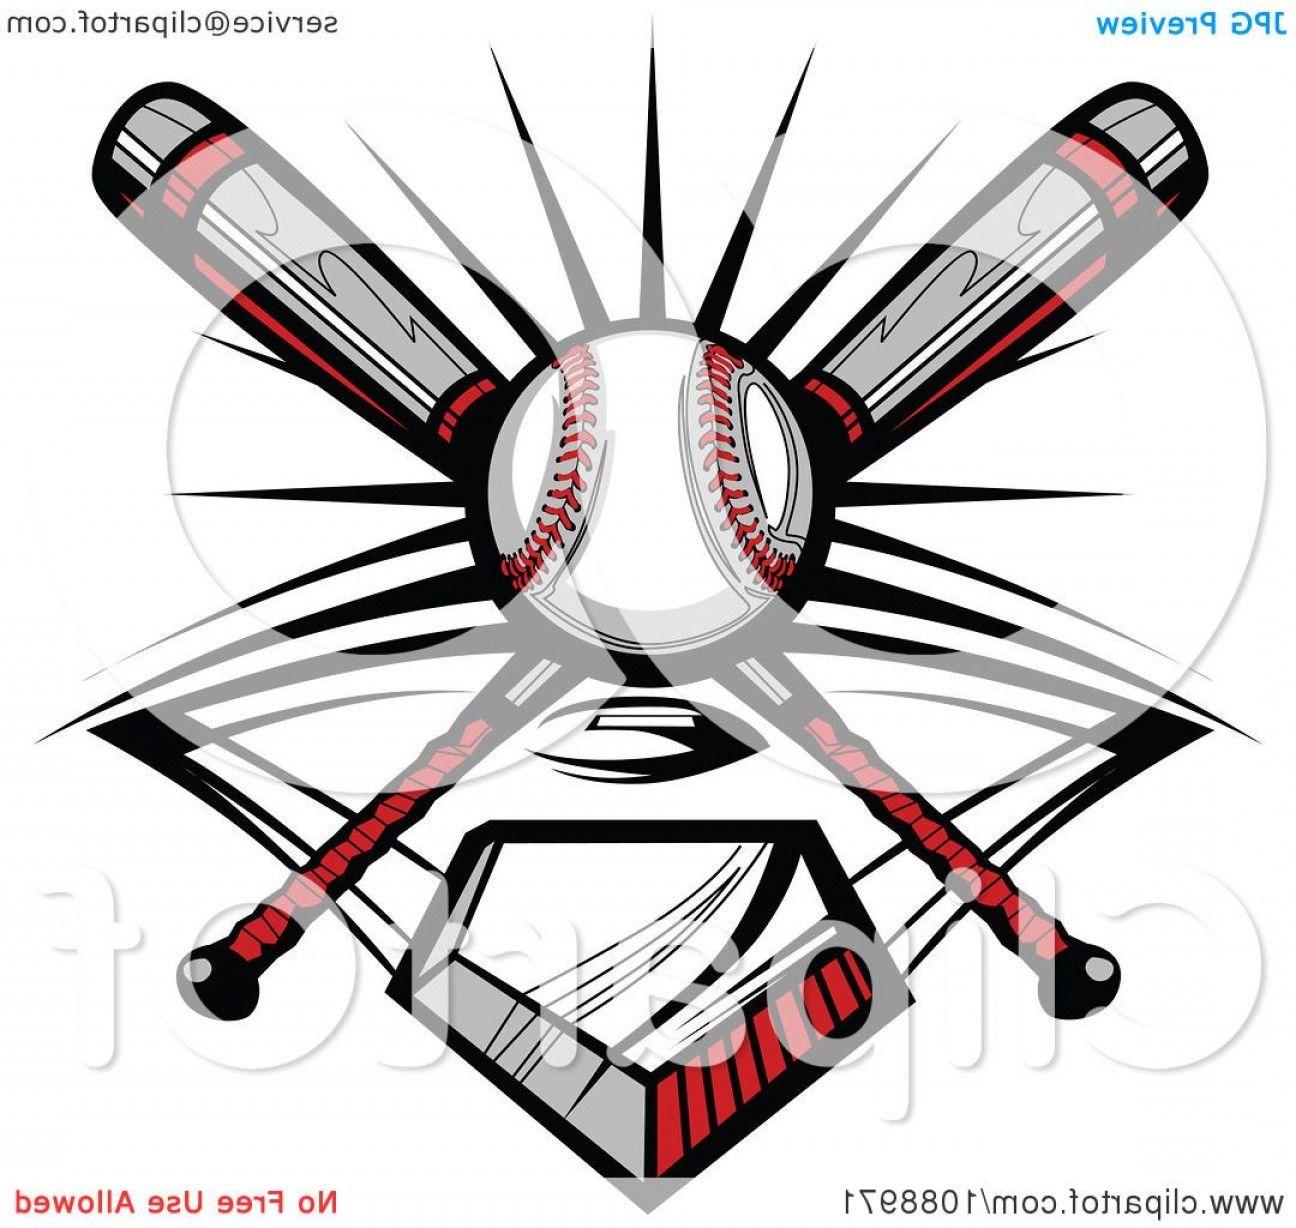 Softball Bat Vector Image Logo - Crossed Baseball Bats A Ball And Diamond | SOIDERGI